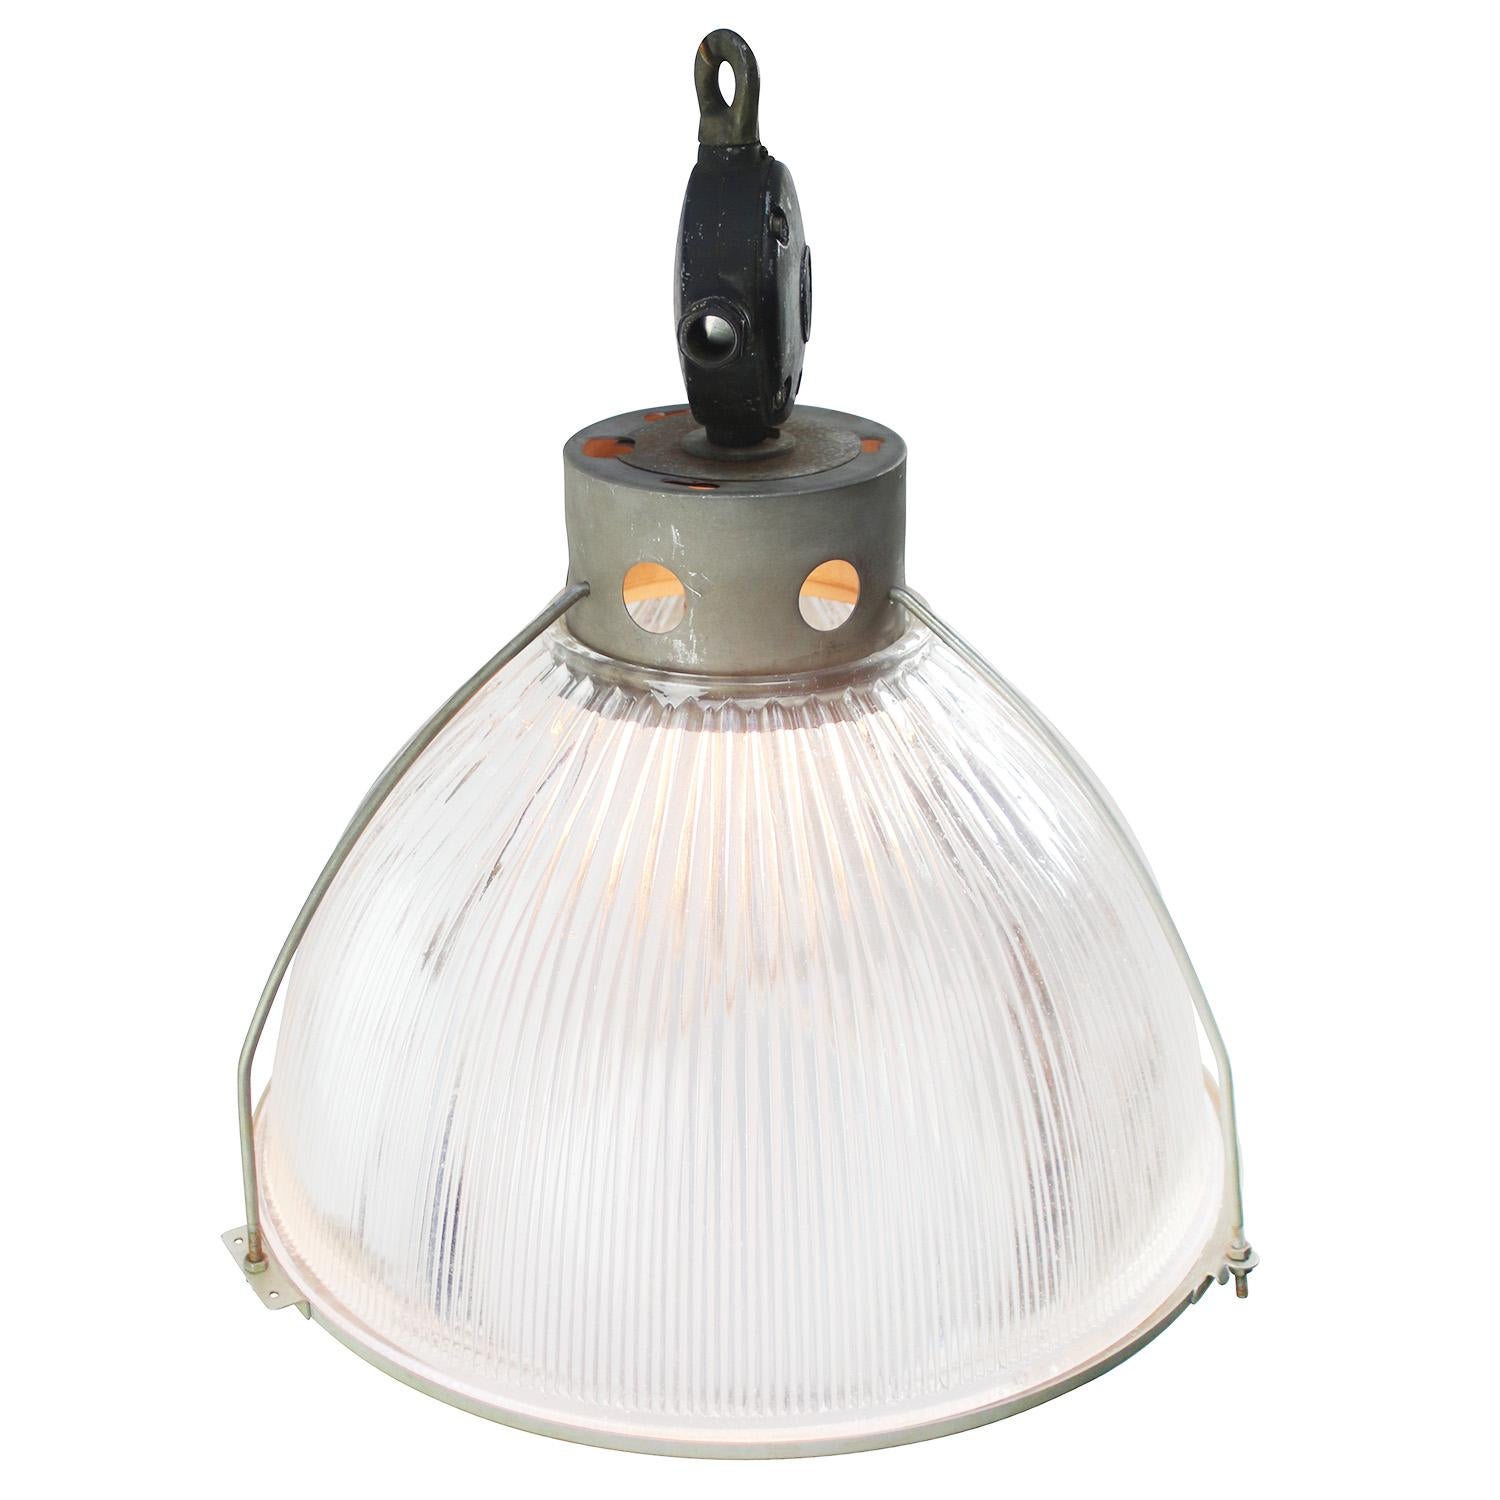 Glass lamp by Holophane, UK.
Metal top. Porcelain bulb holder.
2 meter / 80